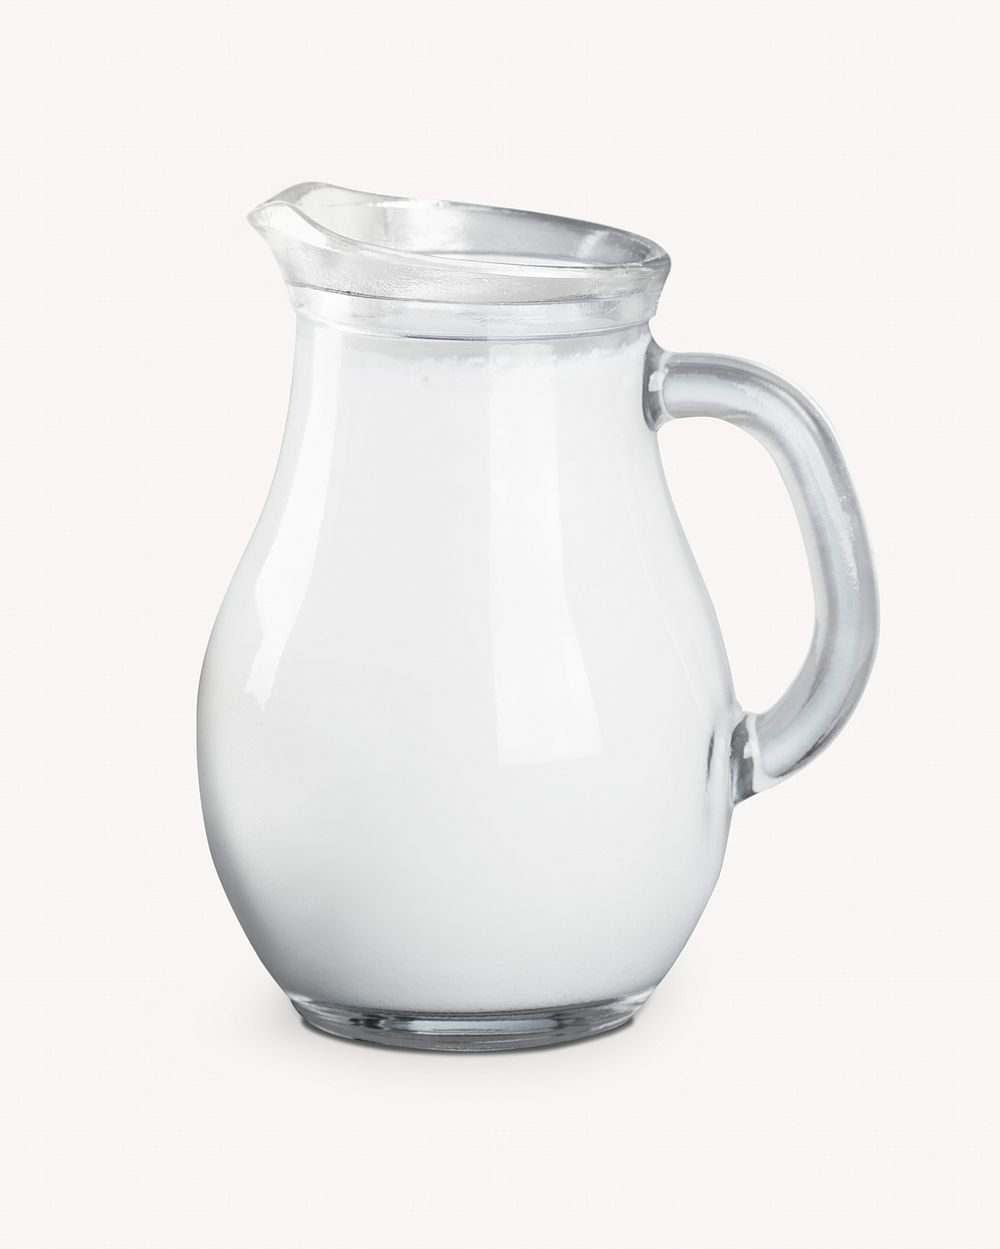 Milk jar, food, off white design